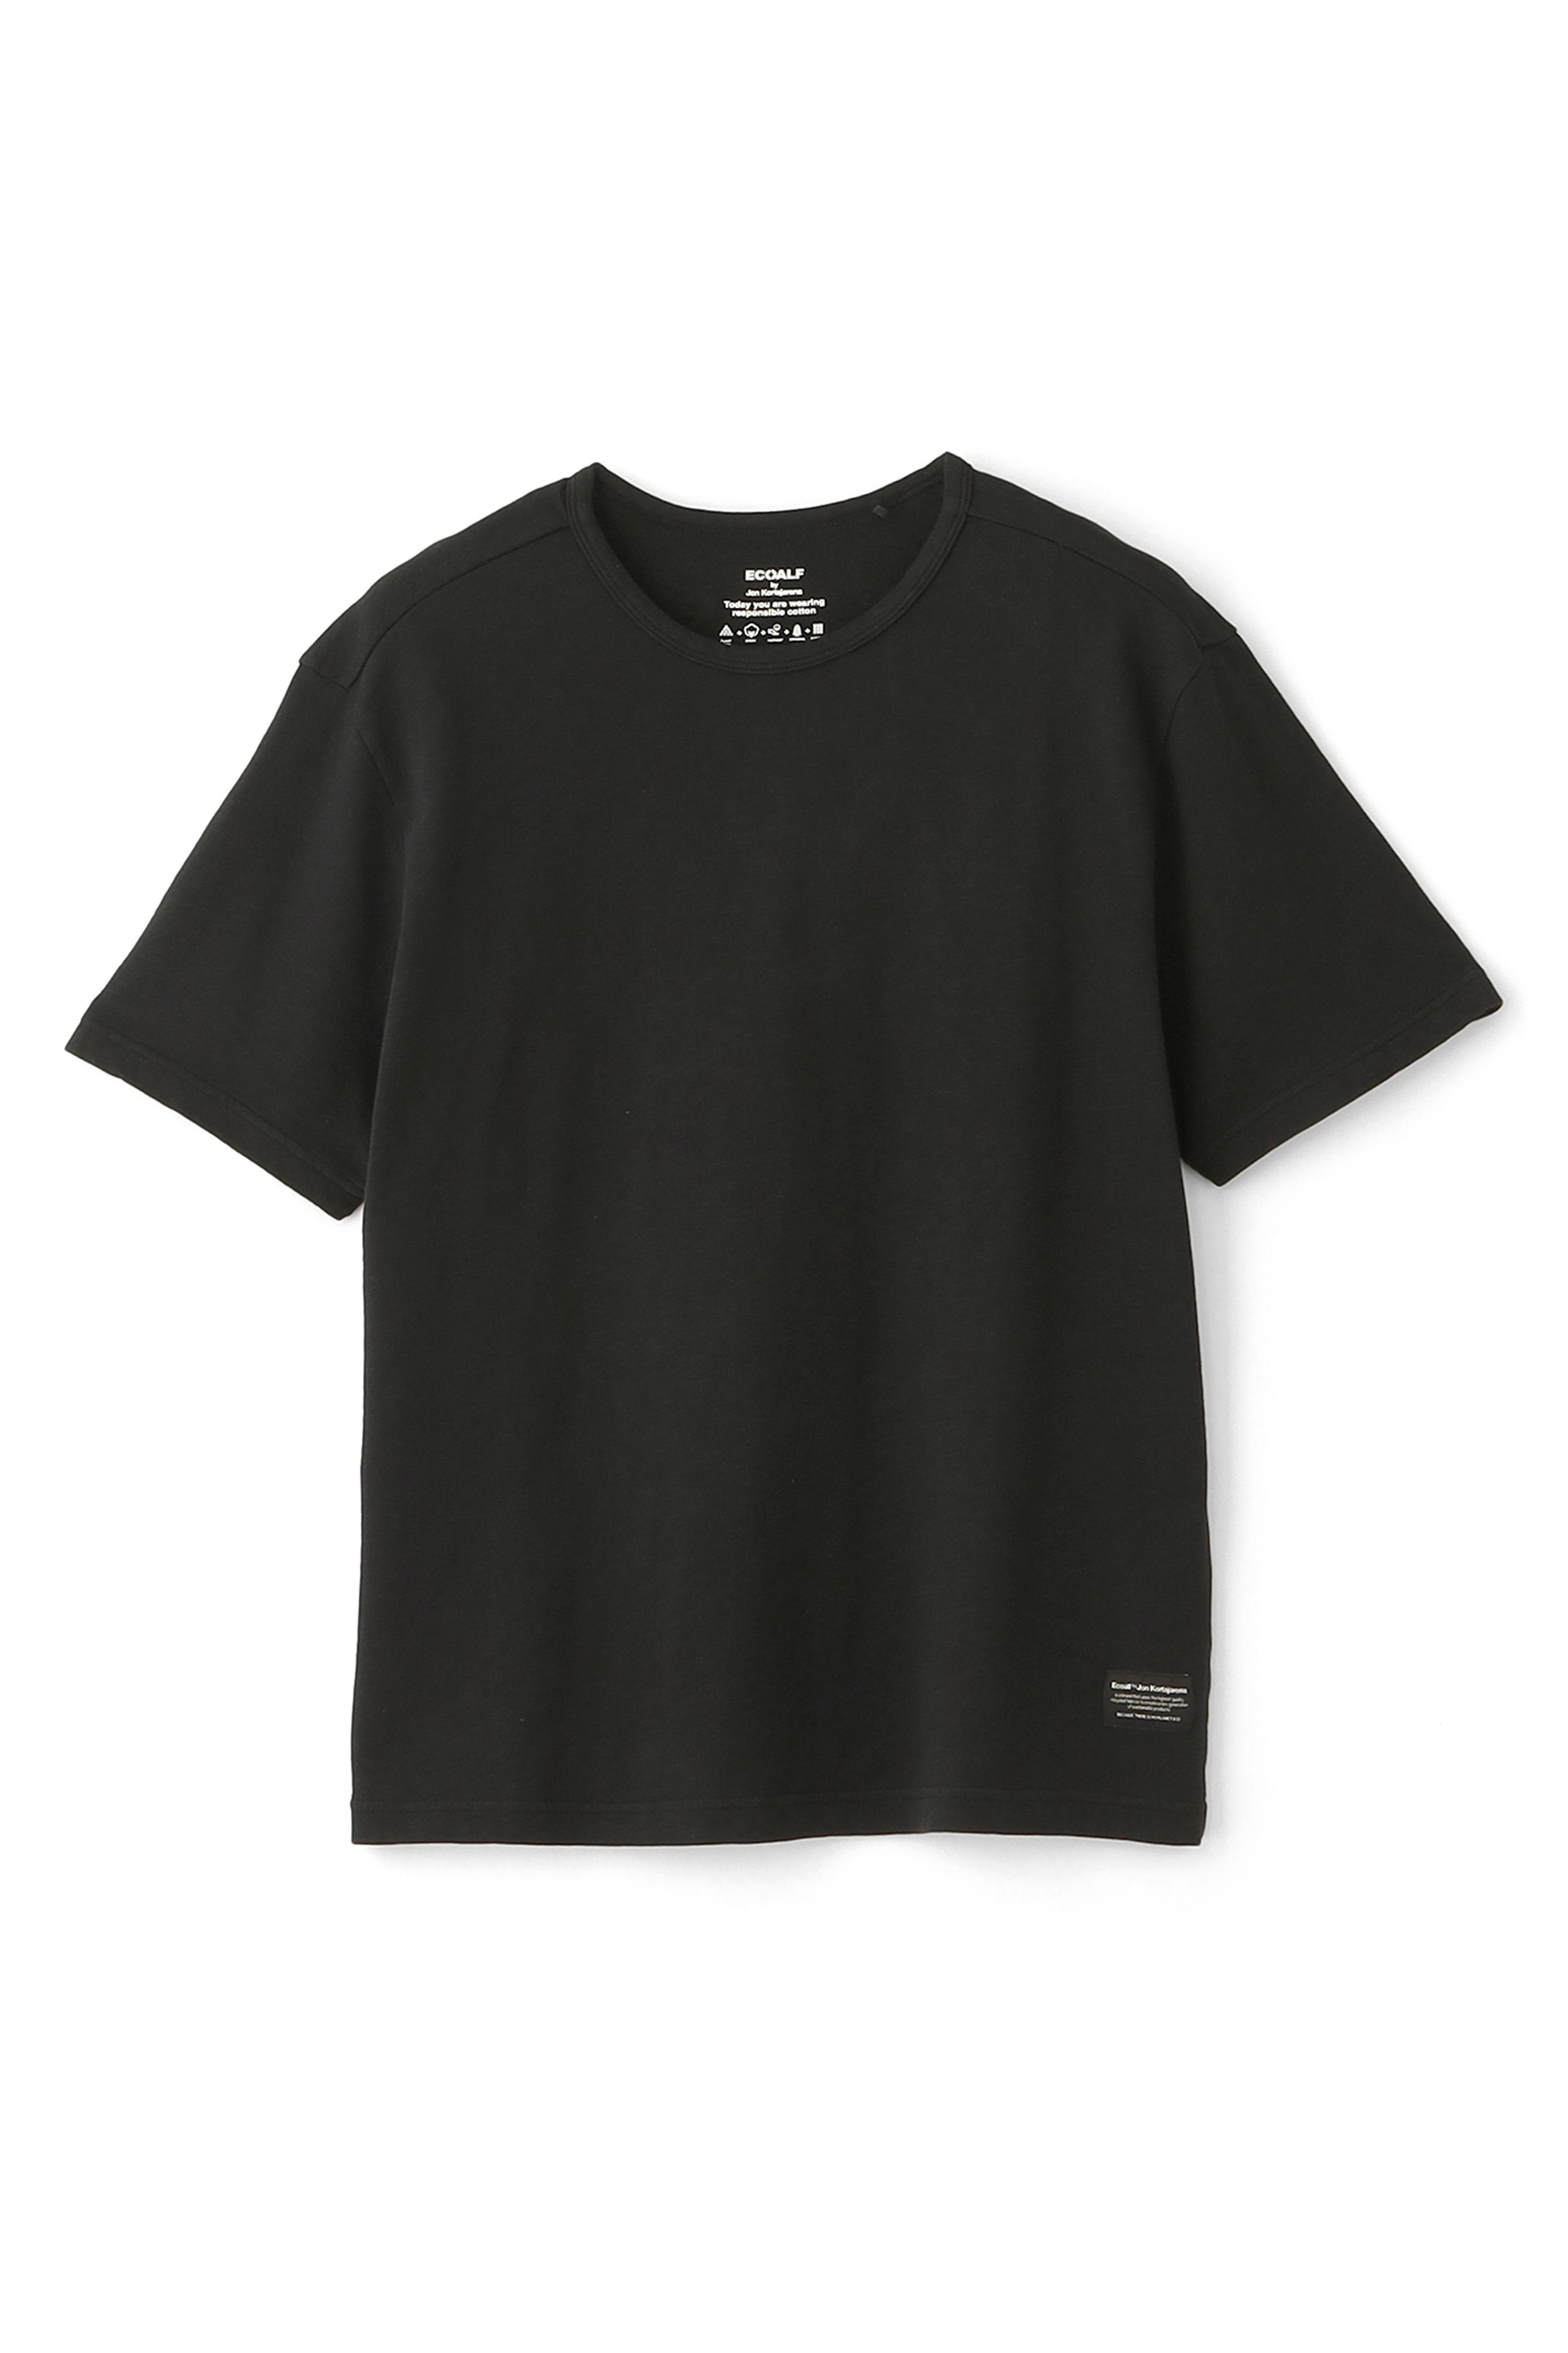  ECOALF 【MEN】【LIMITED】TENESERA メッセージ Tシャツ / TENESERA T-SHIRT UNISEX (ブラック M) エコアルフ ELLE SHOP